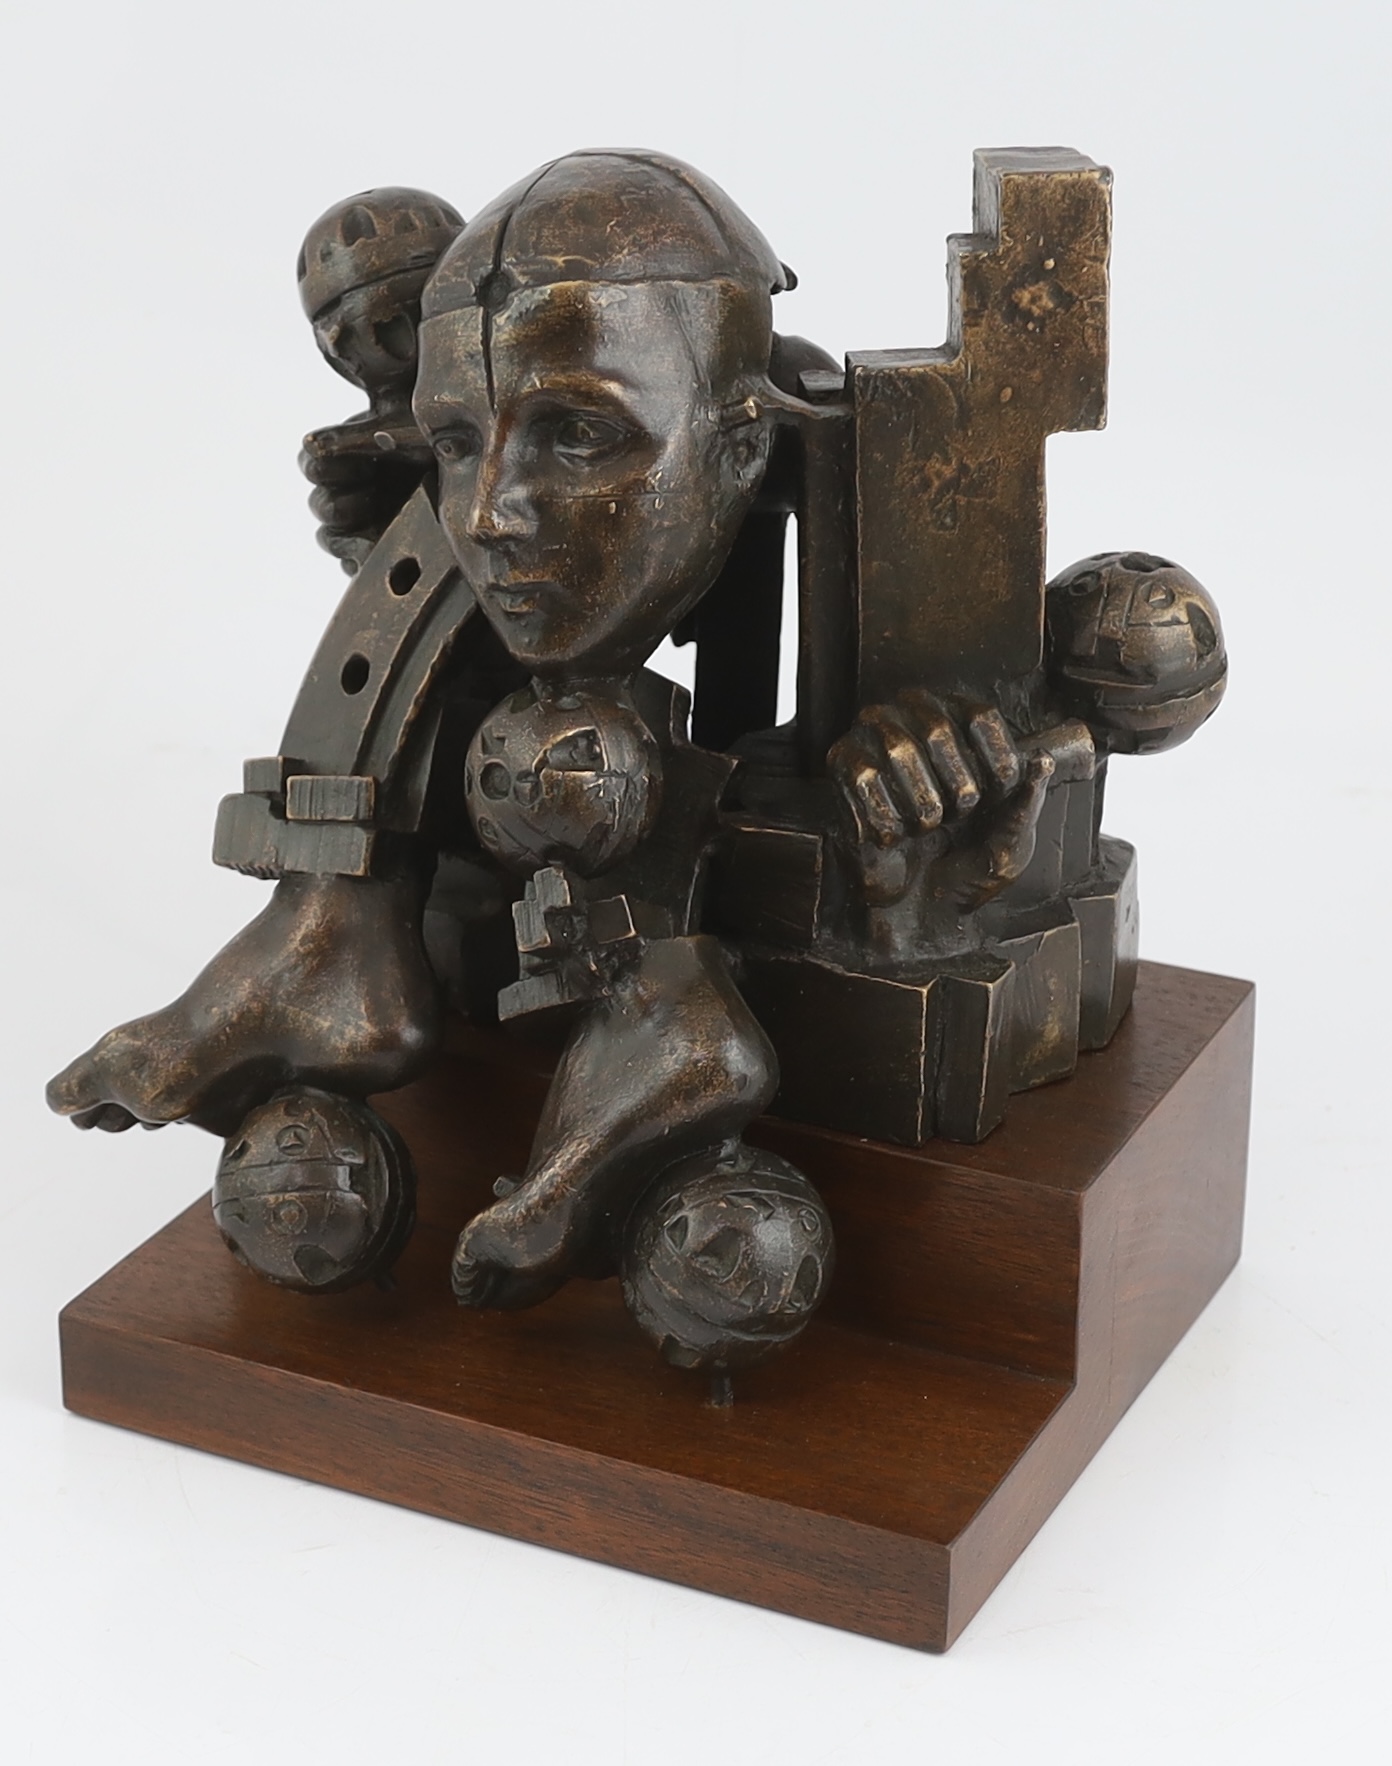 Sir Eduardo Paolozzi RA KBE HRSA (British, 1924-2005), a maquette for Great Ormond Street